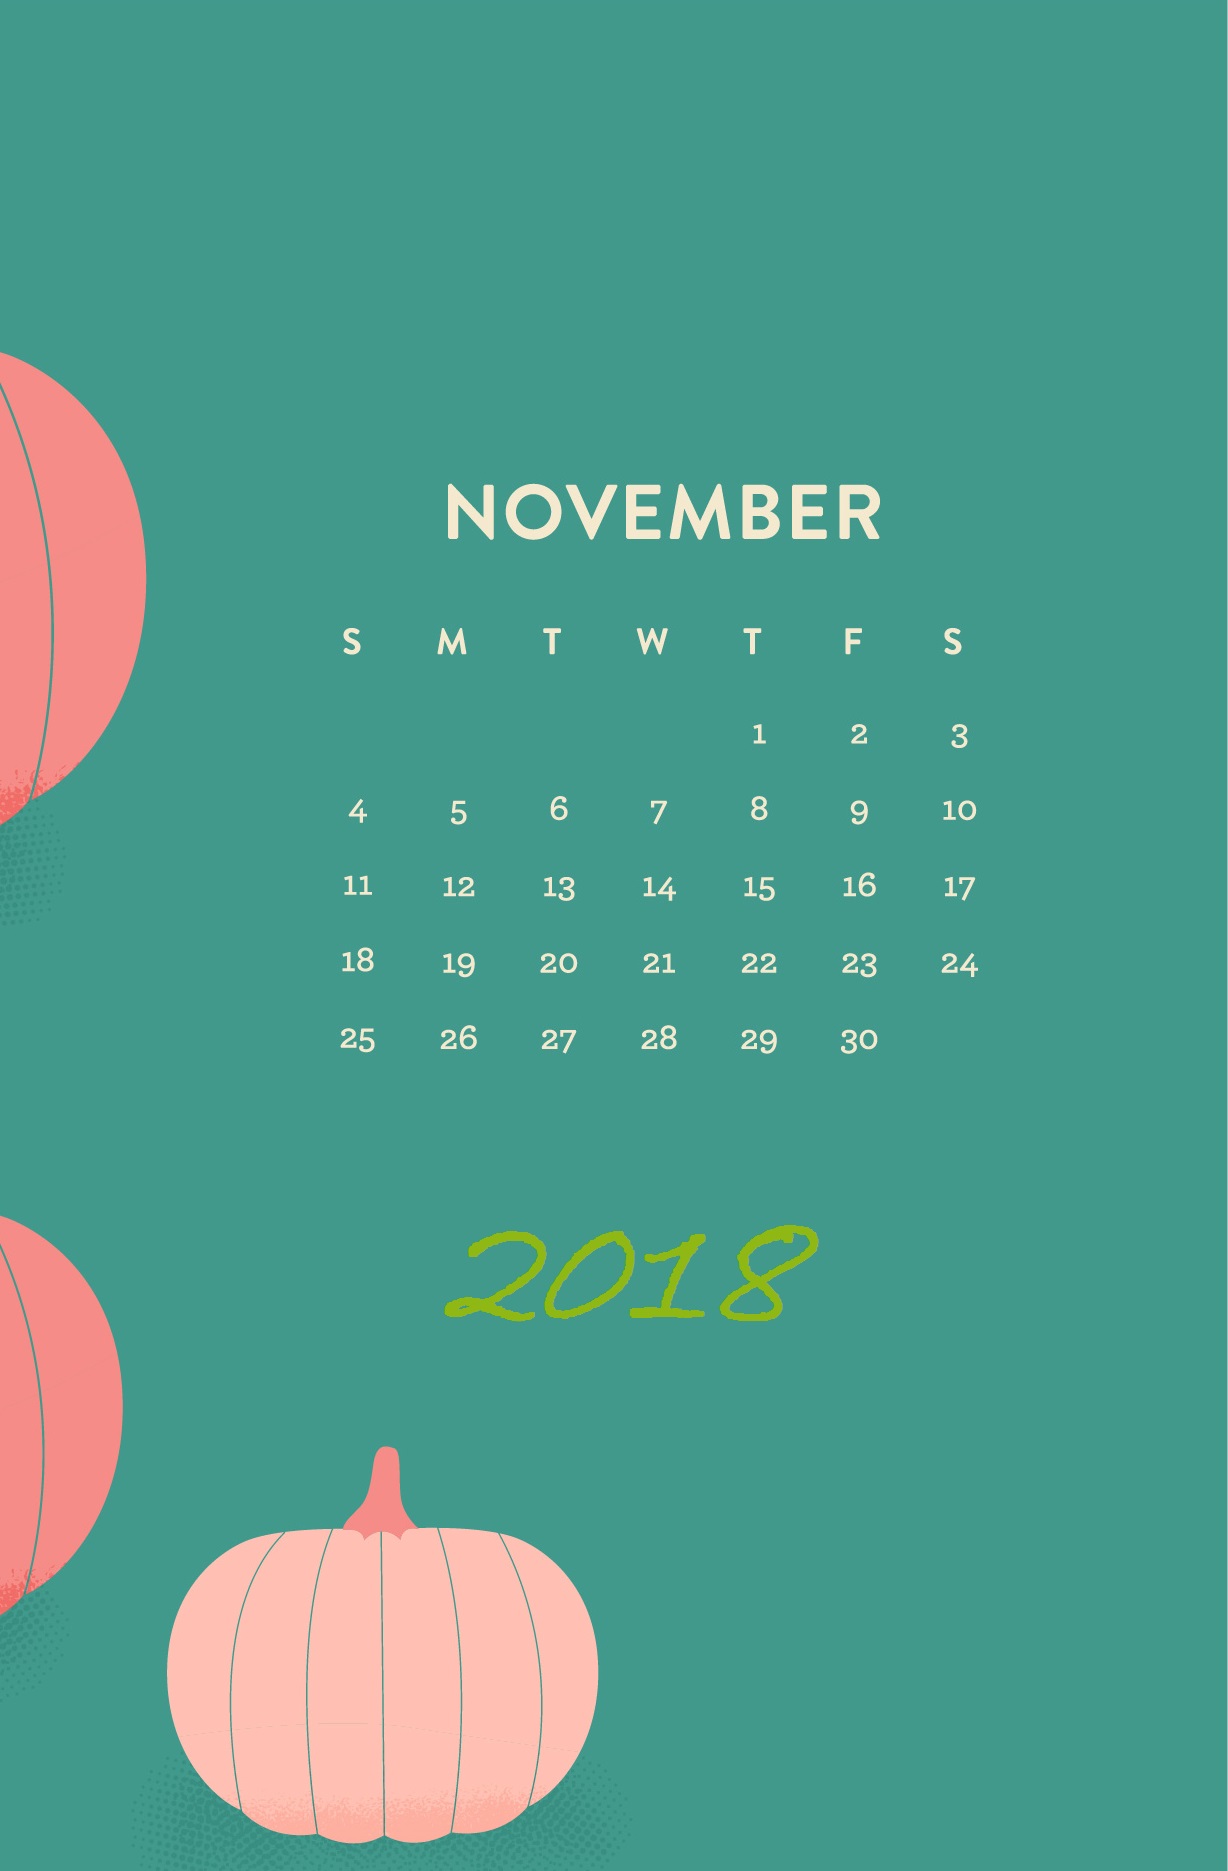 November 2018 Wallpaper With Calendar - November 2018 Wallpaper Calendar - HD Wallpaper 